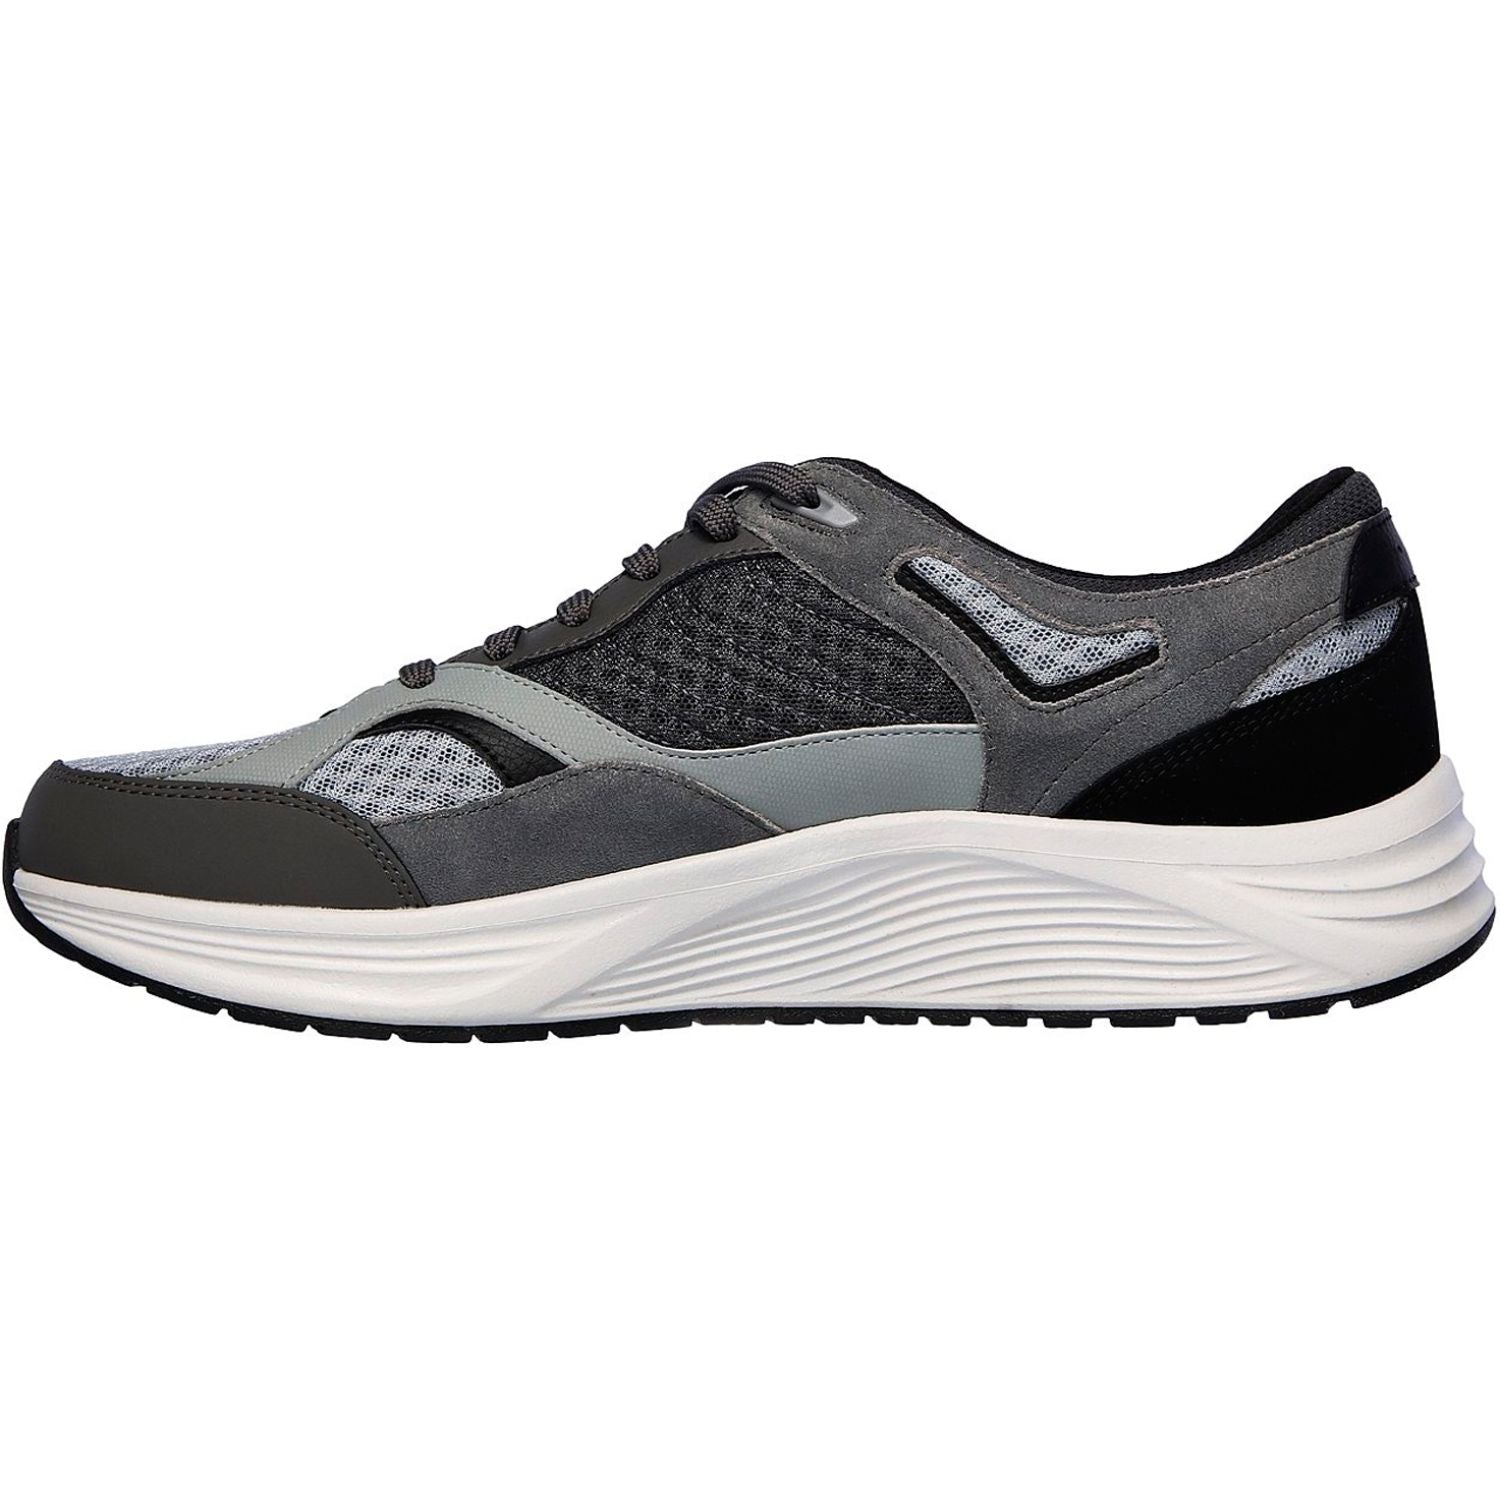 Skechers sneakers da uomo Skyline Alphaborne 52968 GYBK grigio-nero